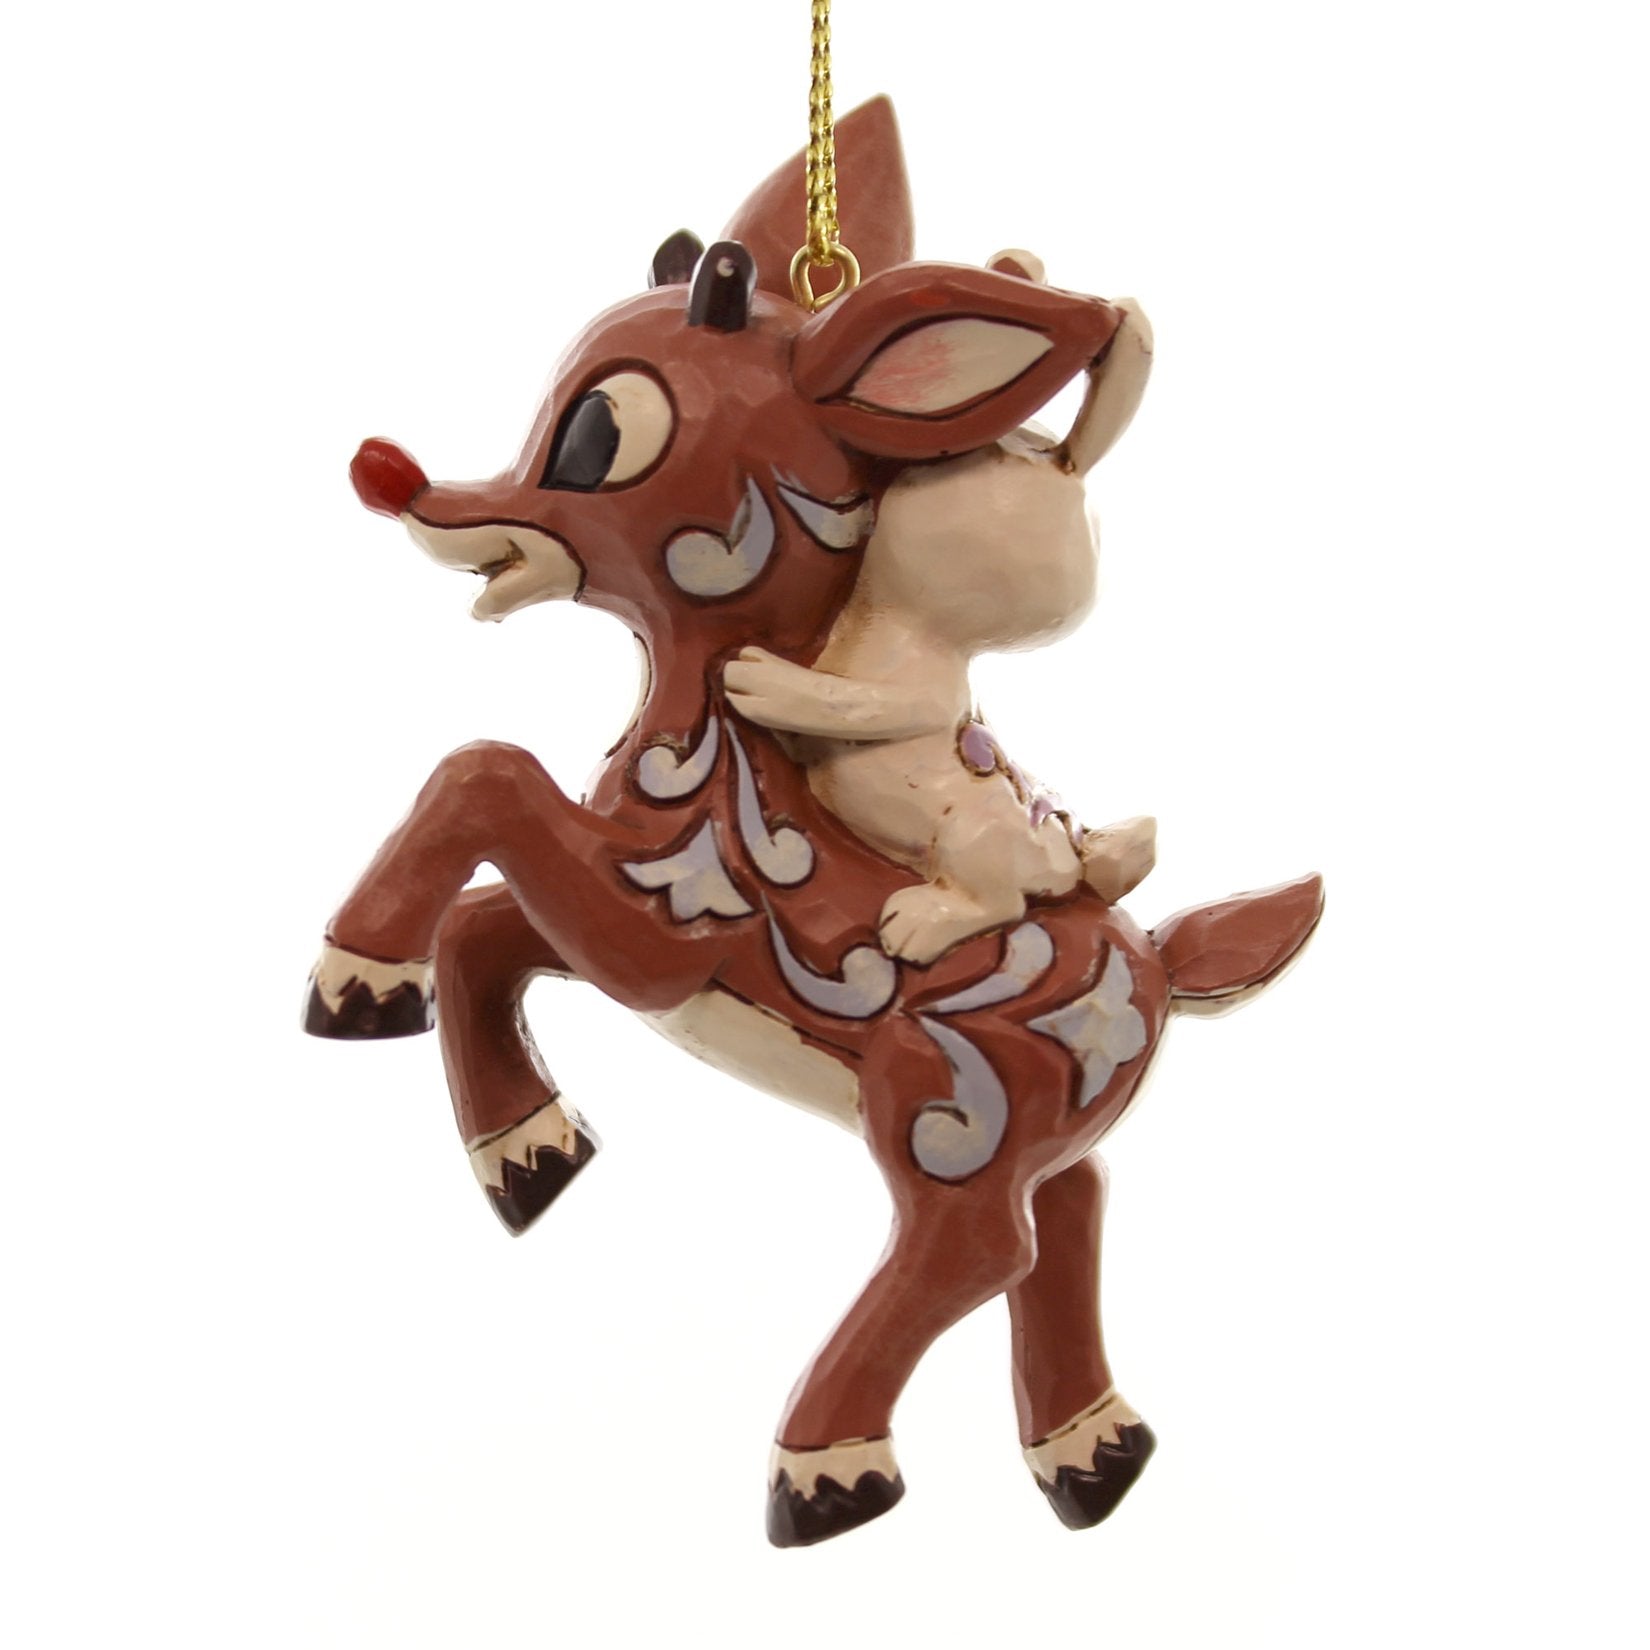 Jim Shore for Enesco Rudolph Carrying Bunny Ornament, 2"